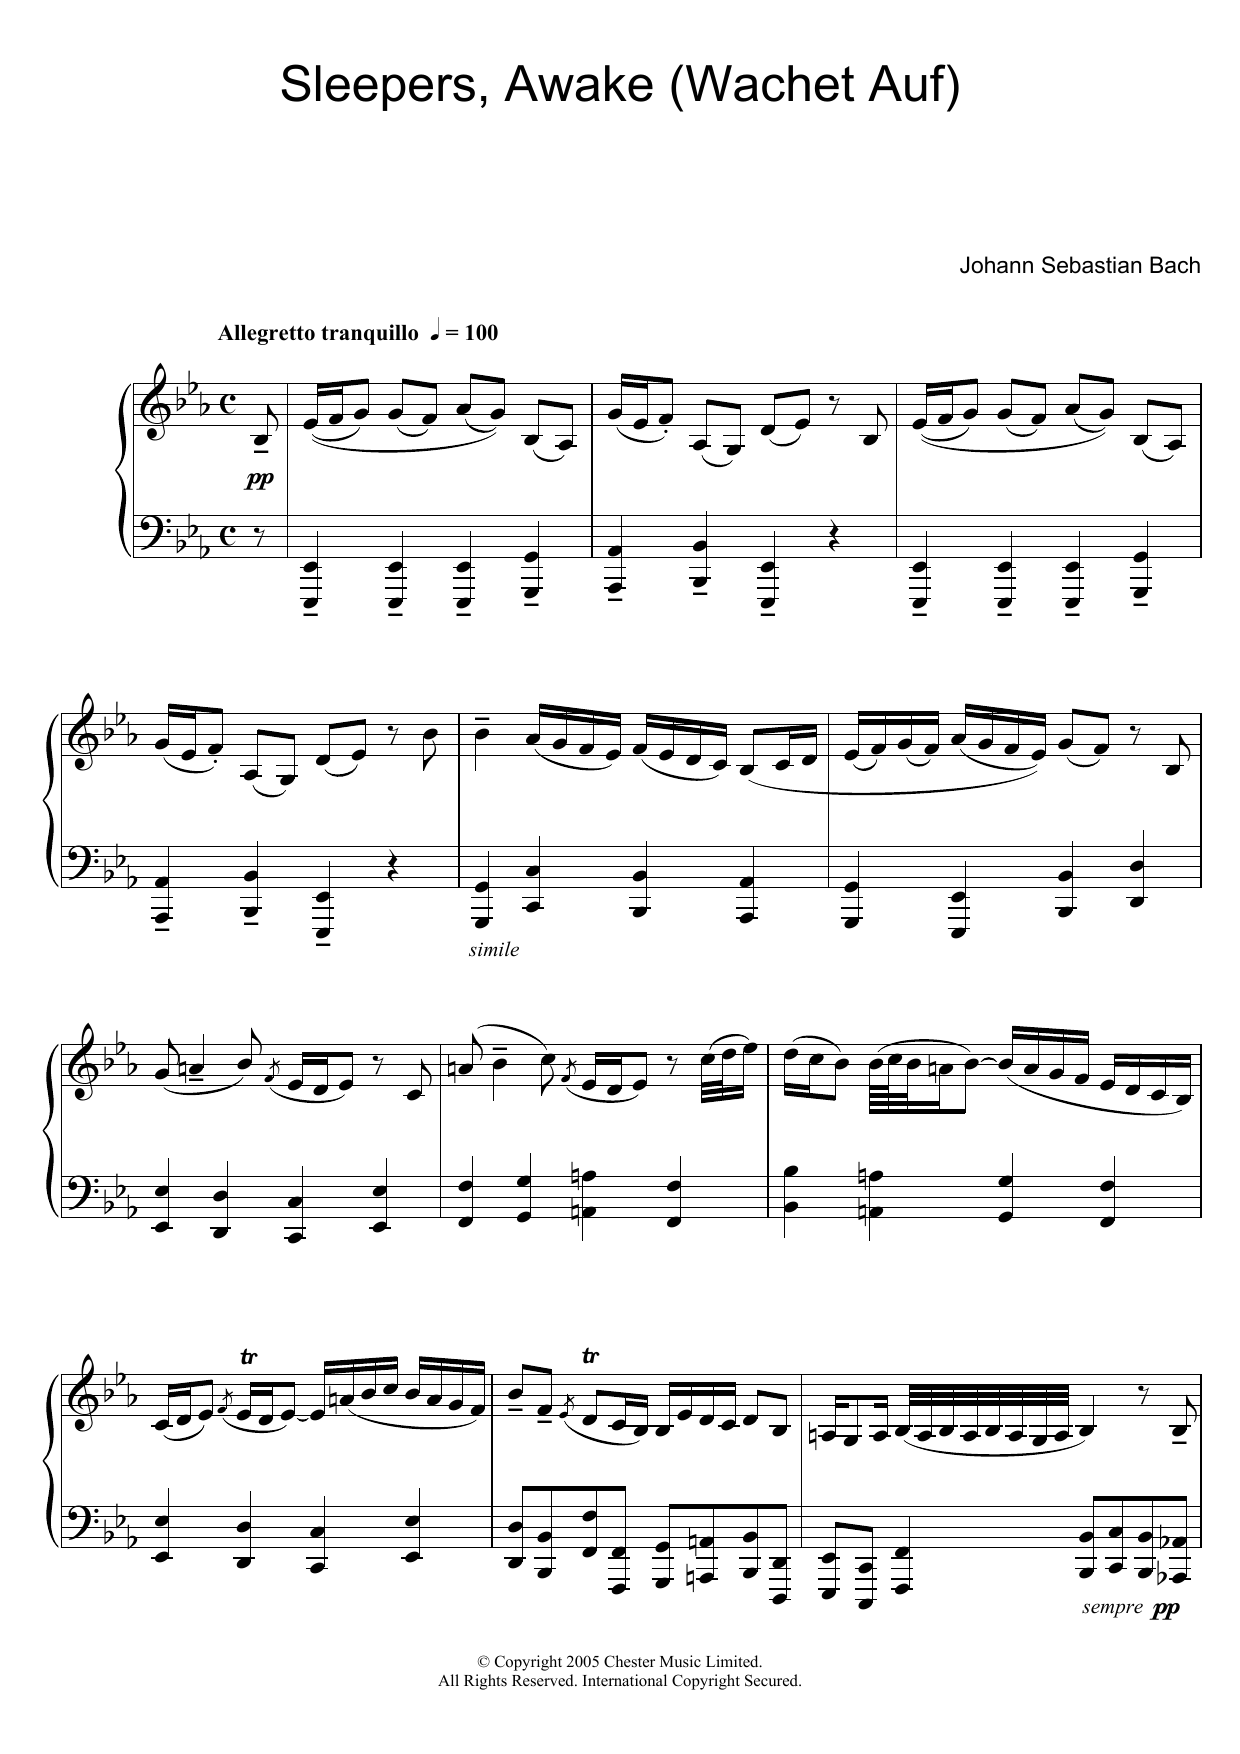 Download Johann Sebastian Bach Sleepers, Awake (Wachet Auf) Sheet Music and learn how to play Trombone PDF digital score in minutes